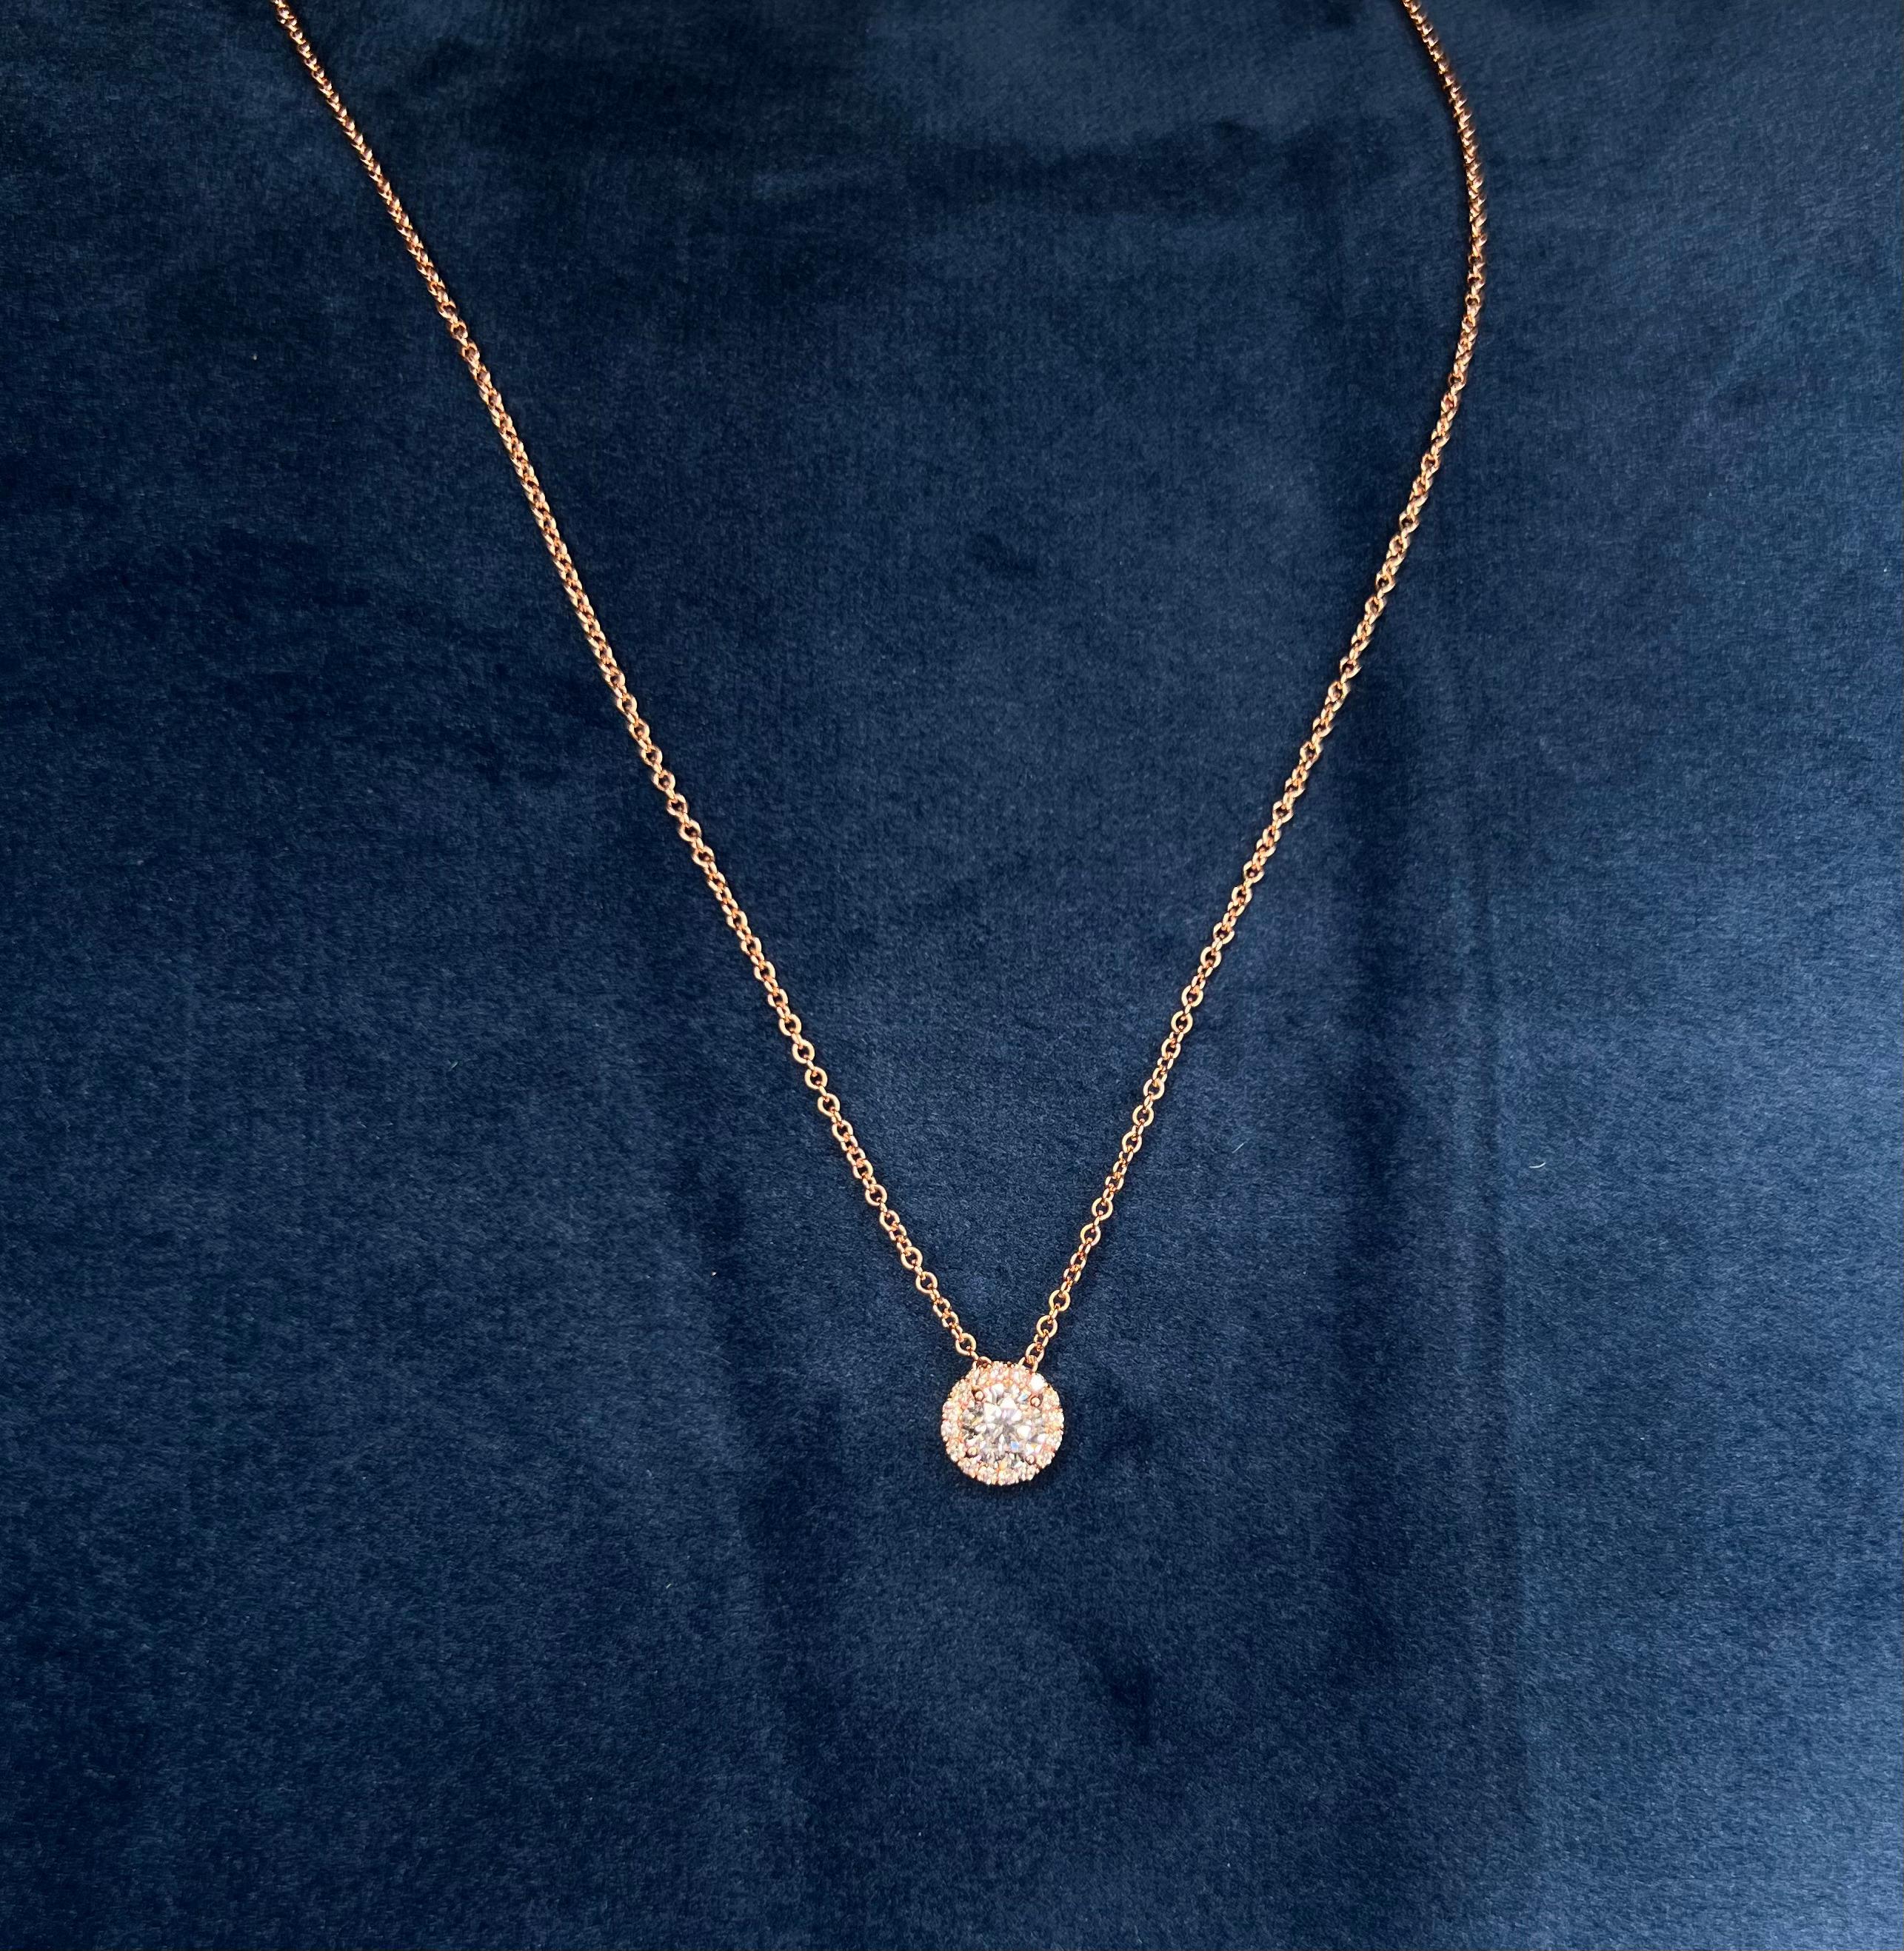 14 inch diamond necklace